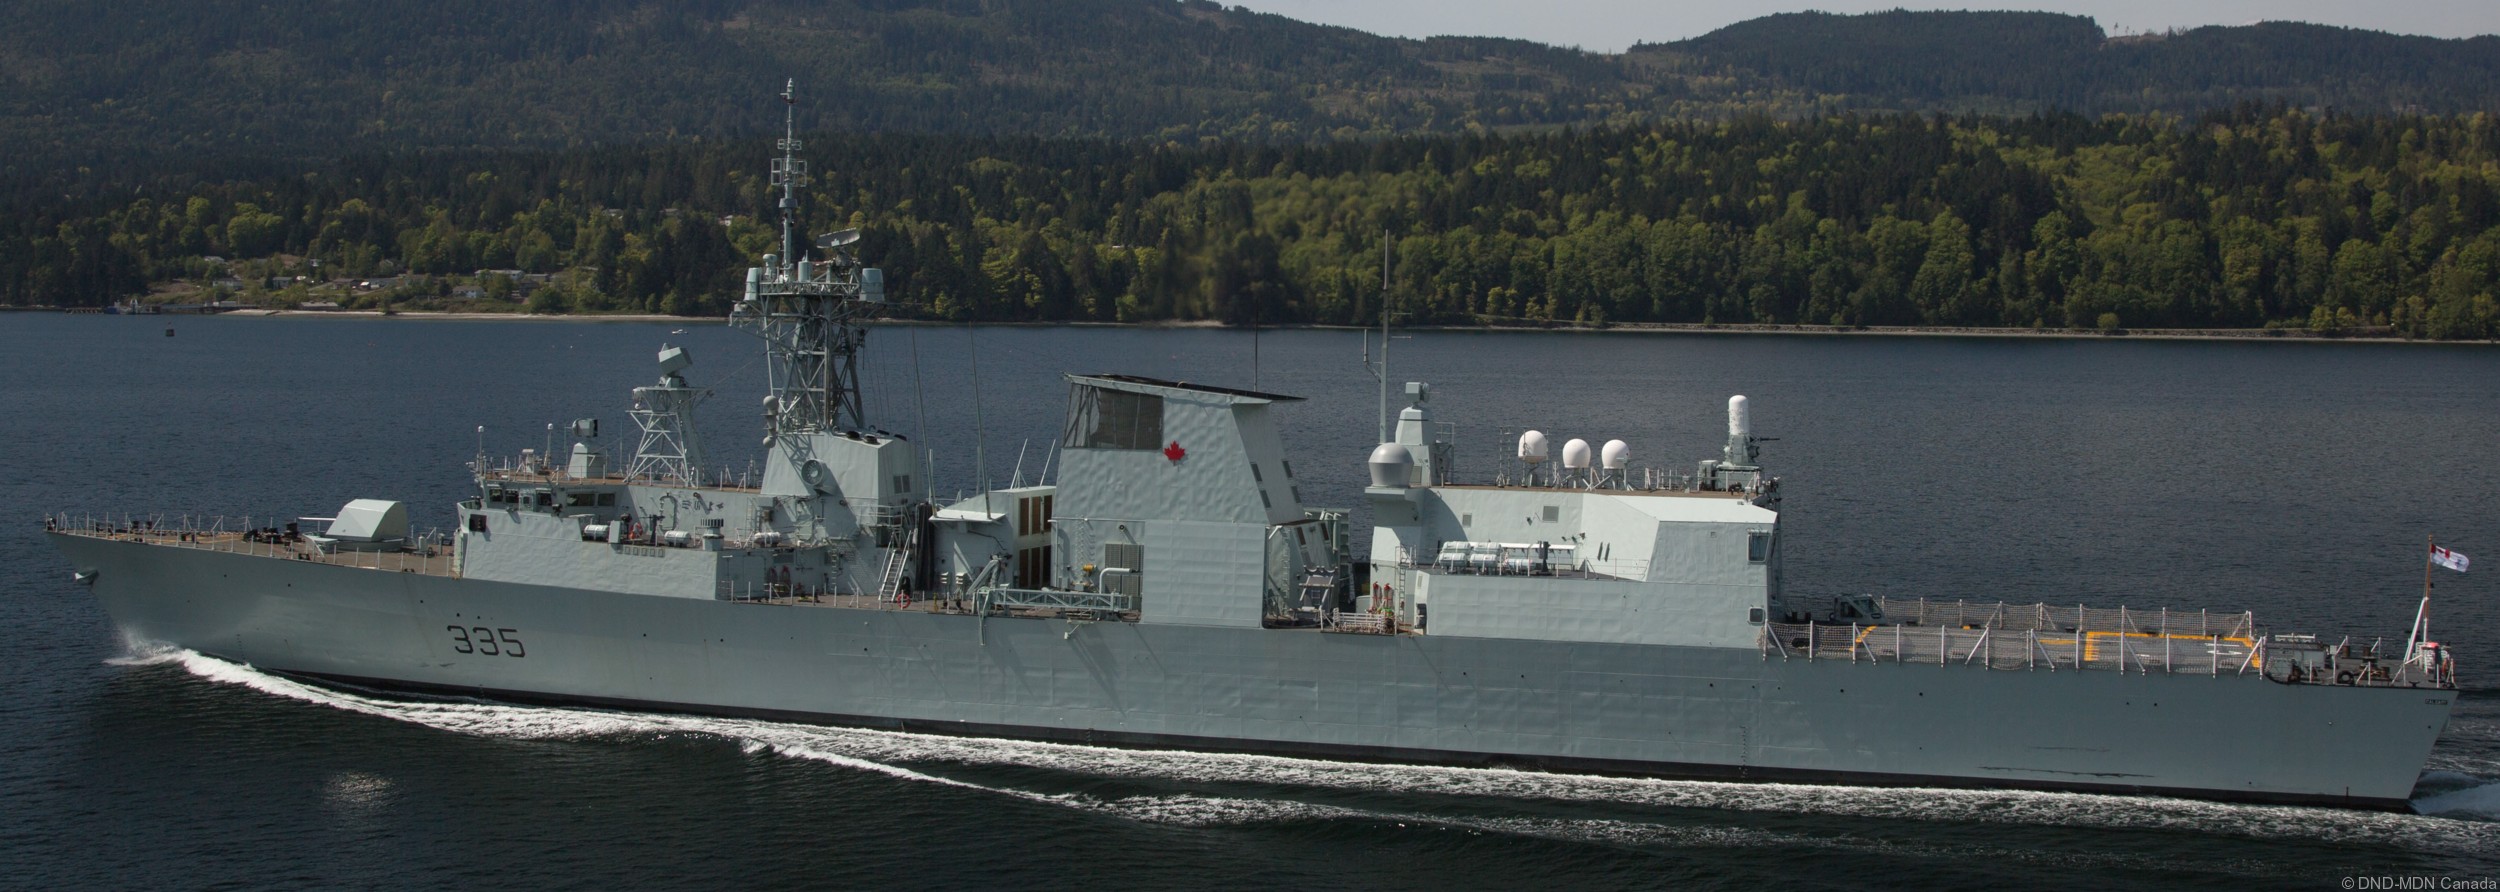 ffh-335 hmcs calgary halifax class helicopter patrol frigate ncsm royal canadian navy 69